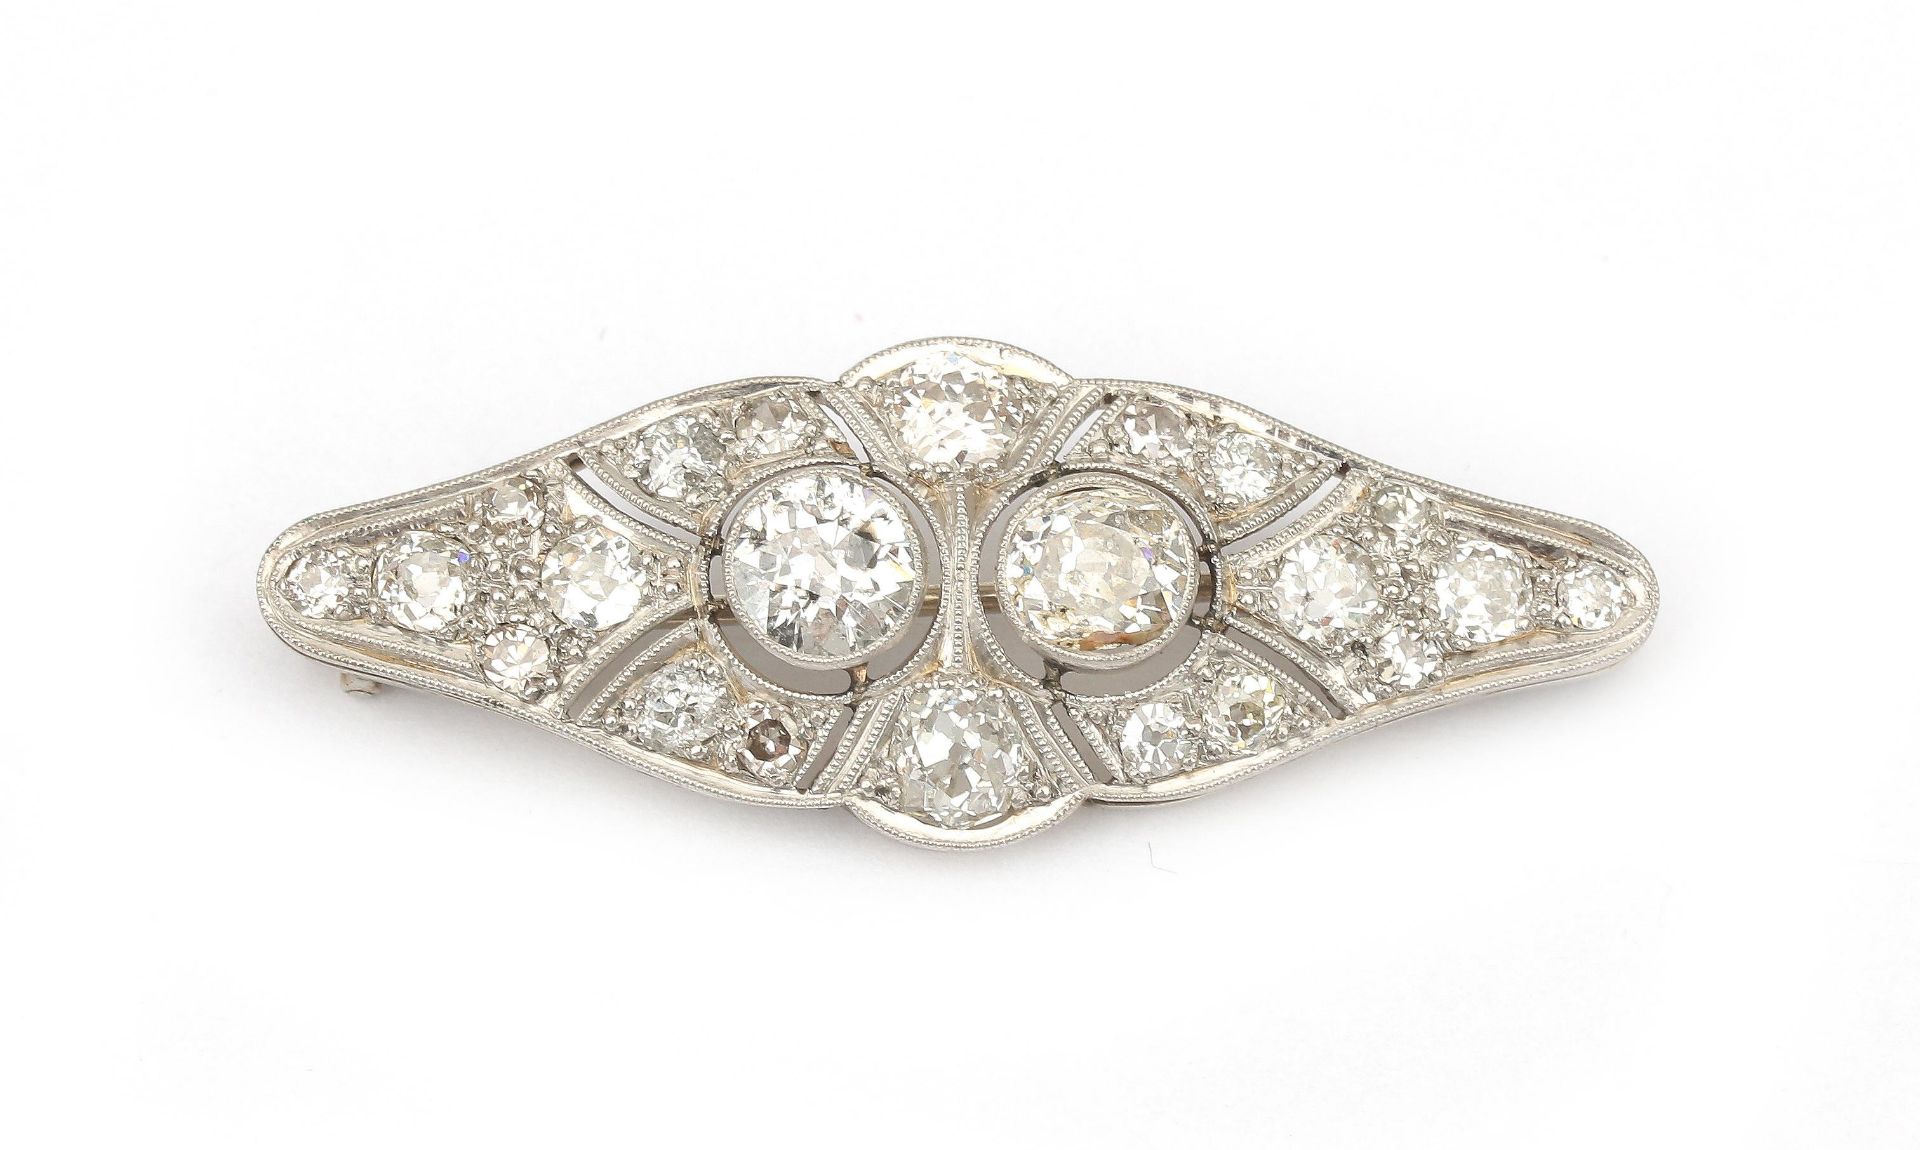 A 14 karat white gold diamond Art Deco brooch, ca. 1930